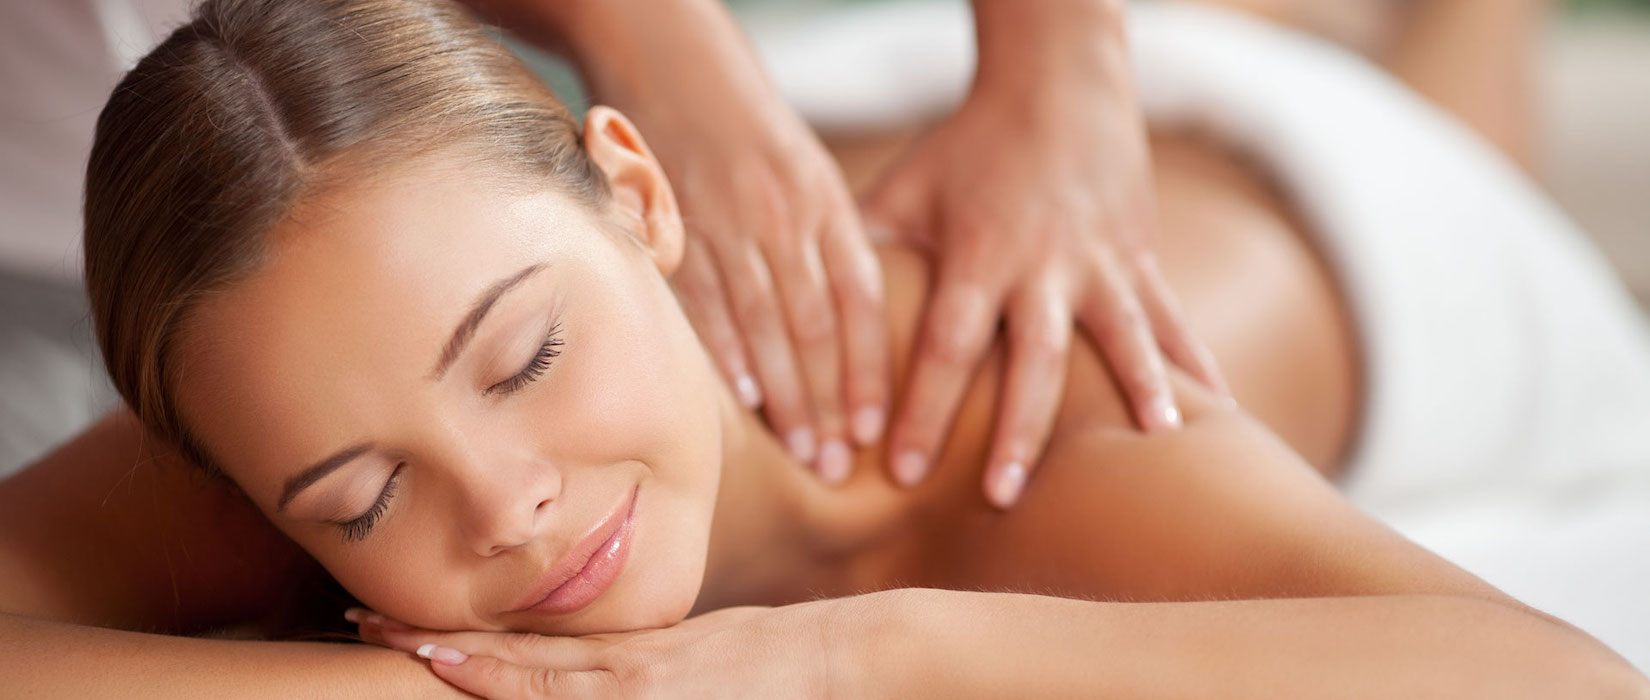 massage therapy margate florida 33063